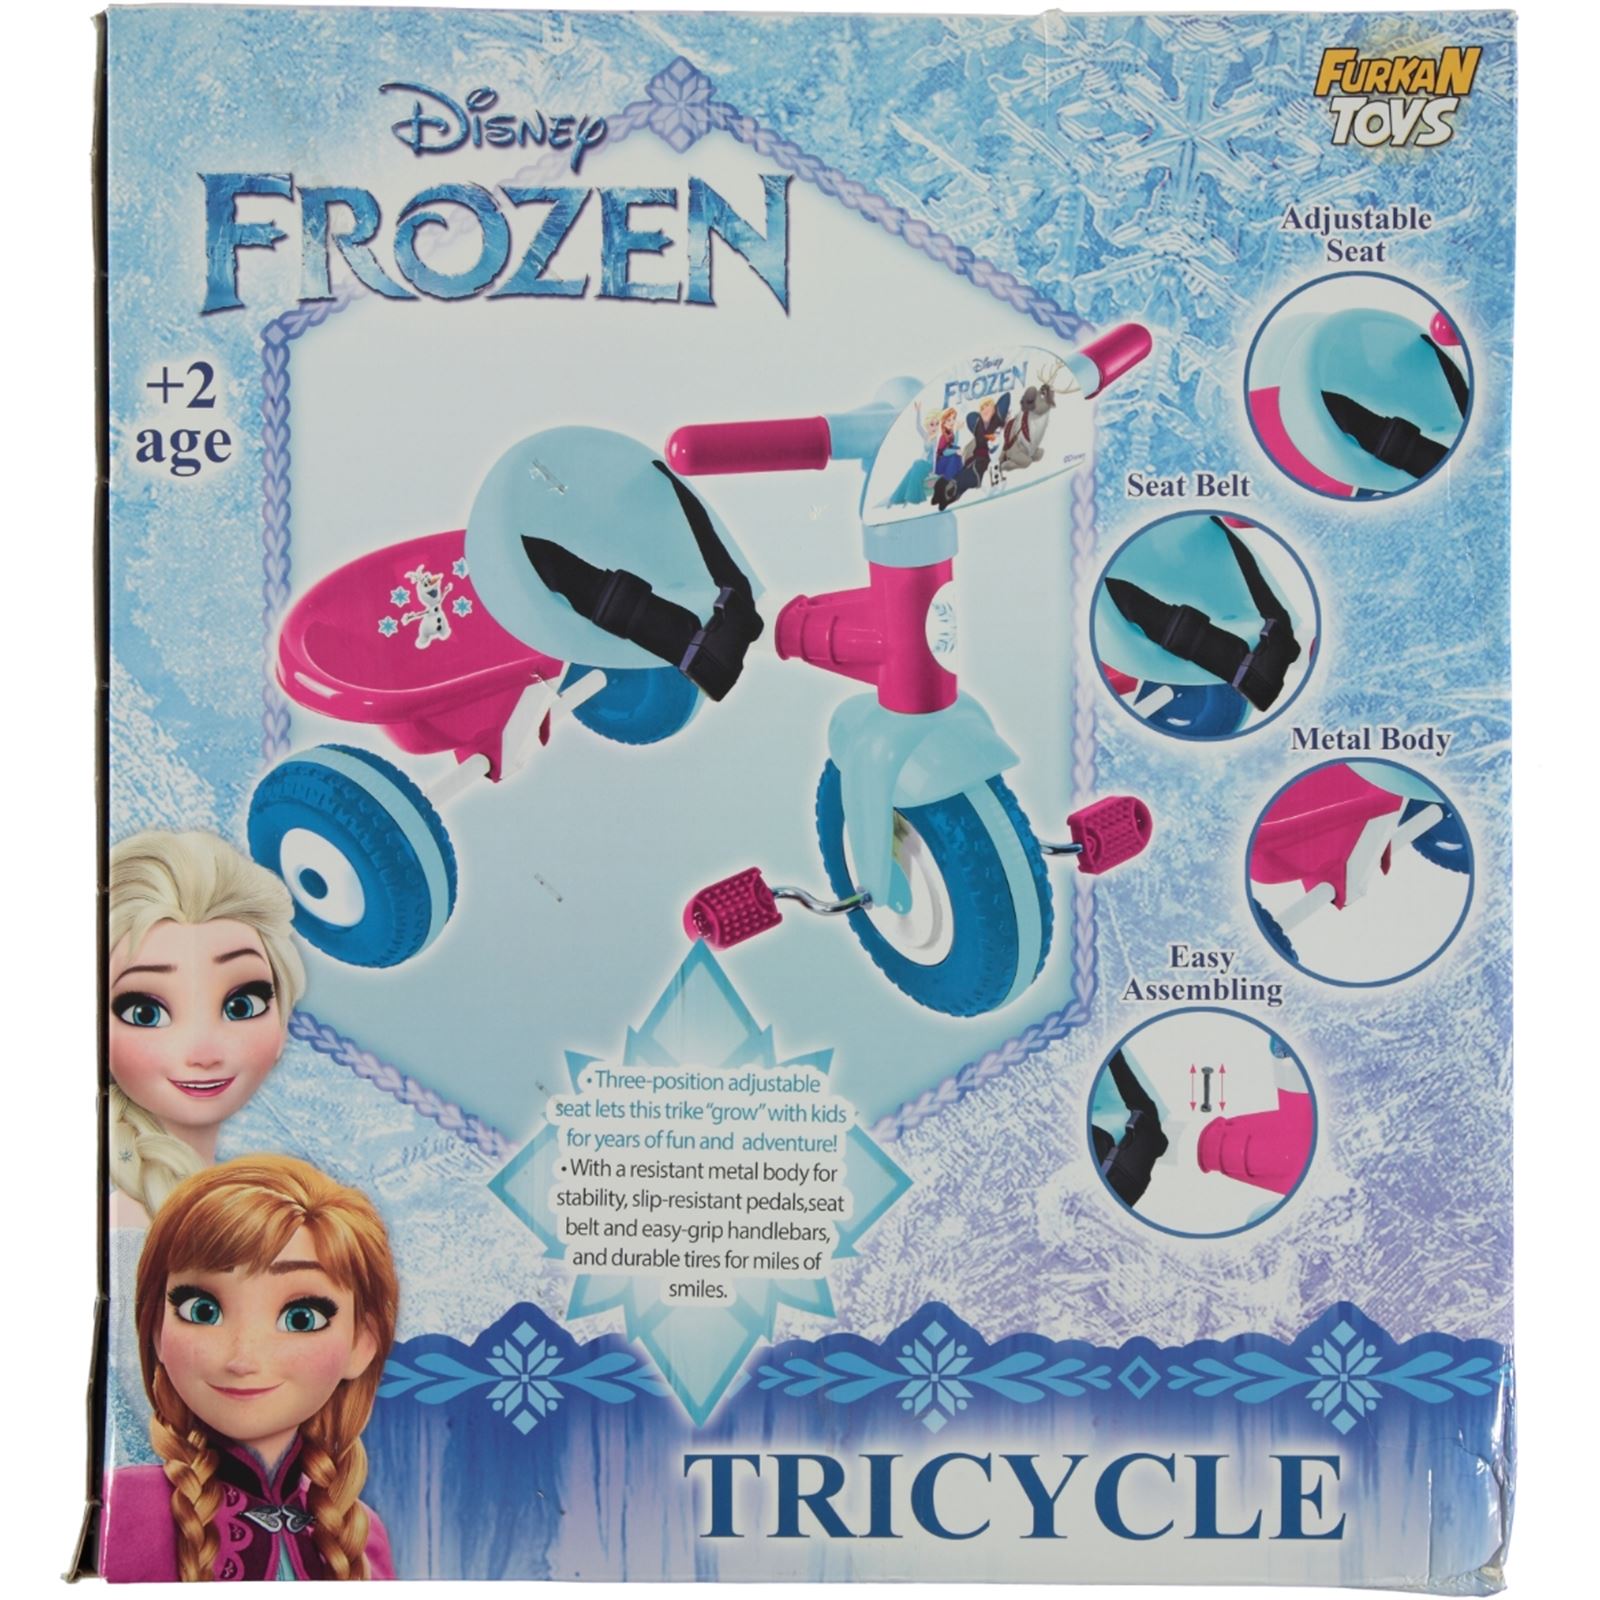 Furkan Toys Frozen Bisiklet +2 Yaş